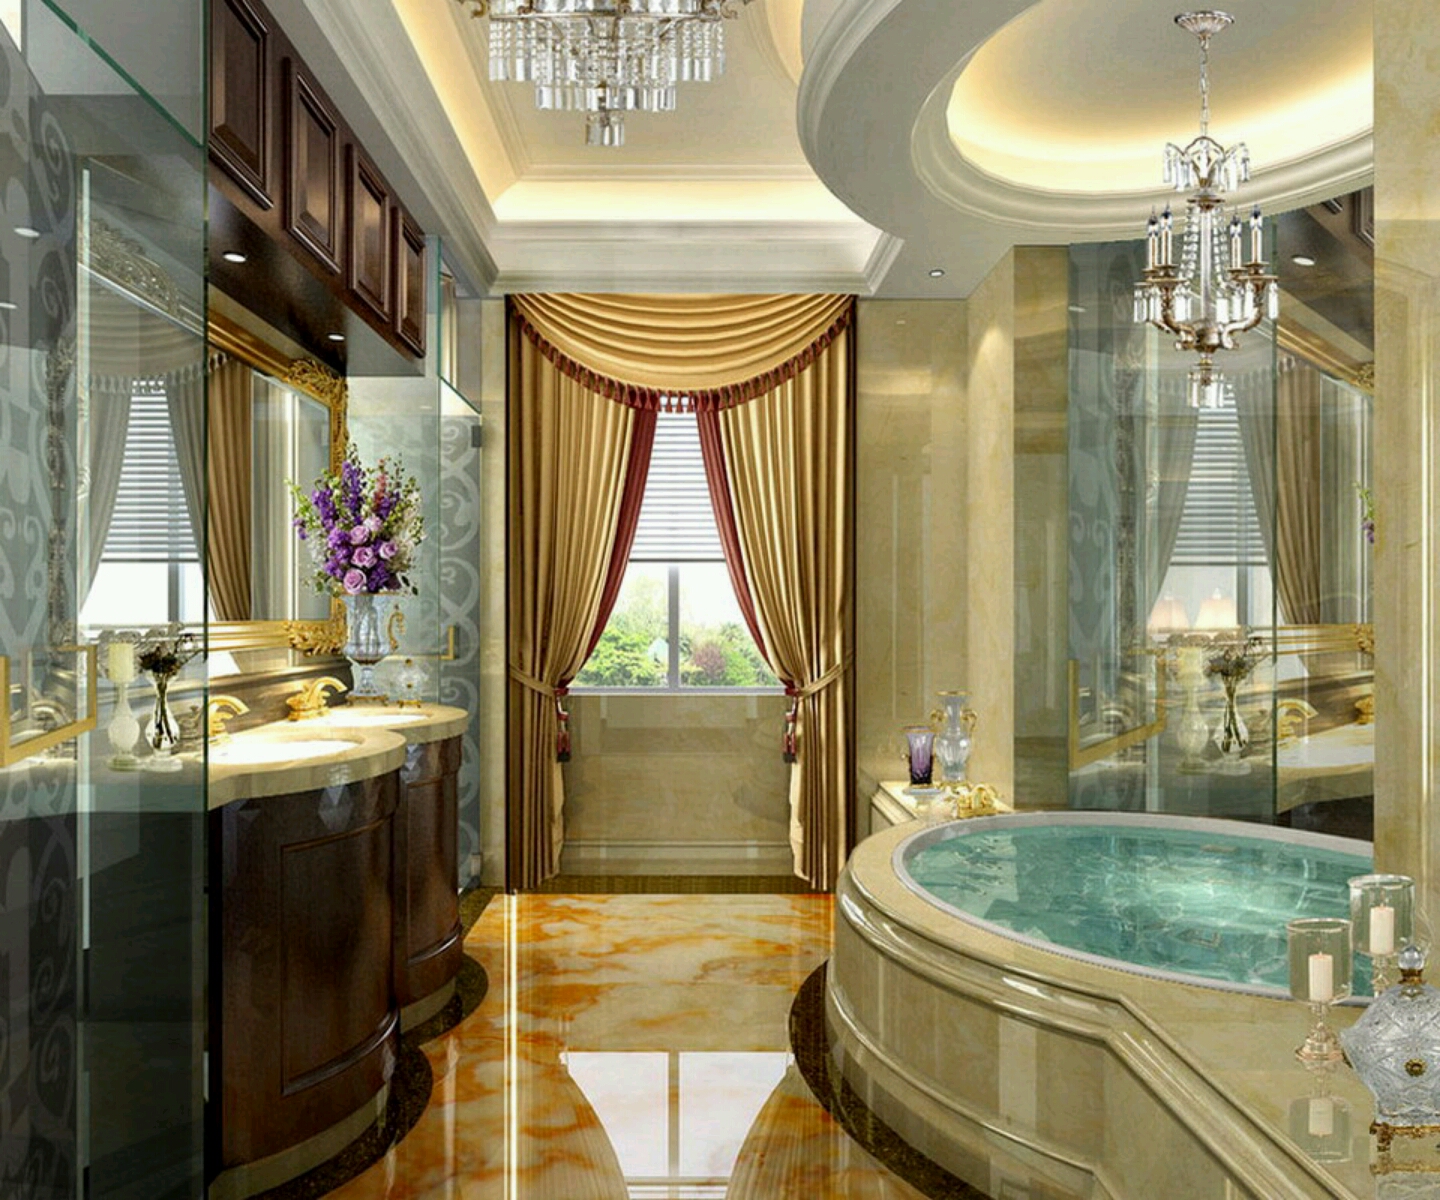  New  home  designs  latest Luxury modern bathrooms  designs  